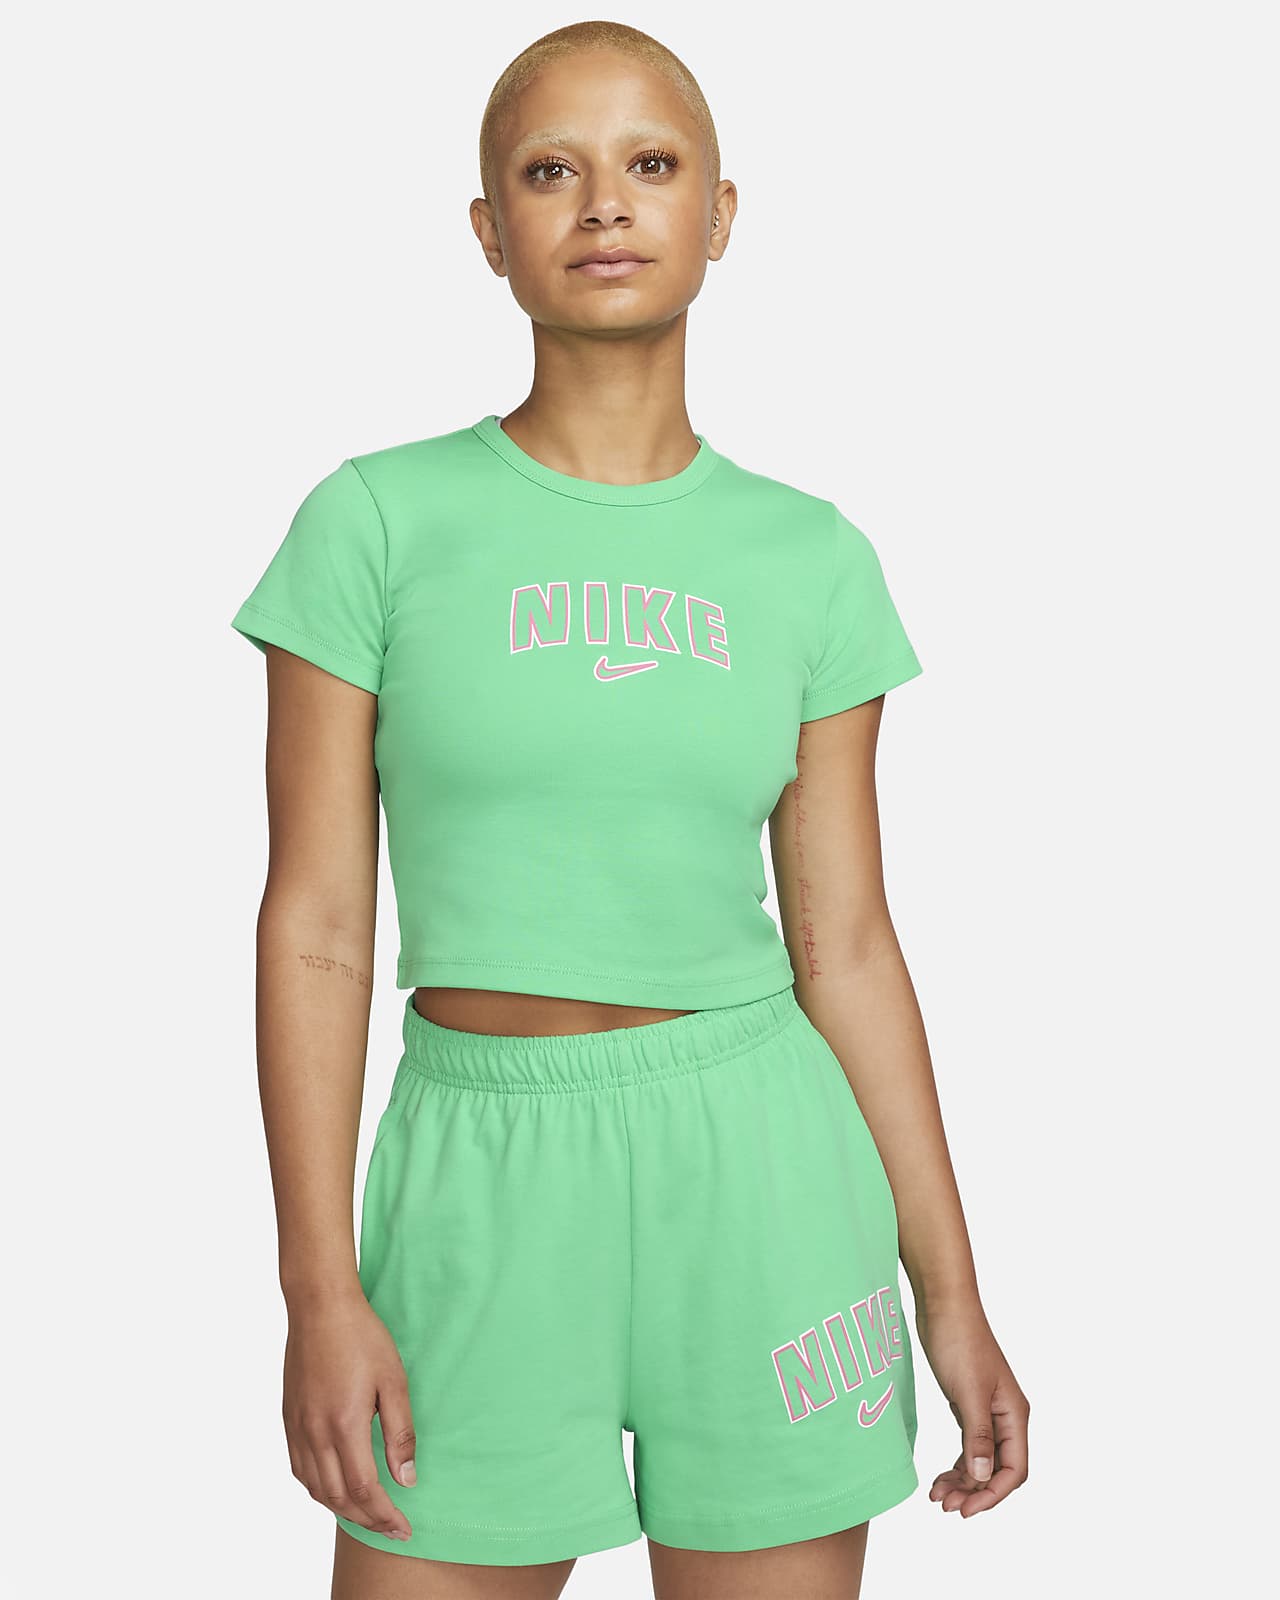 Bek Onderdrukken Dapperheid Nike Sportswear kort T-shirt voor dames. Nike BE